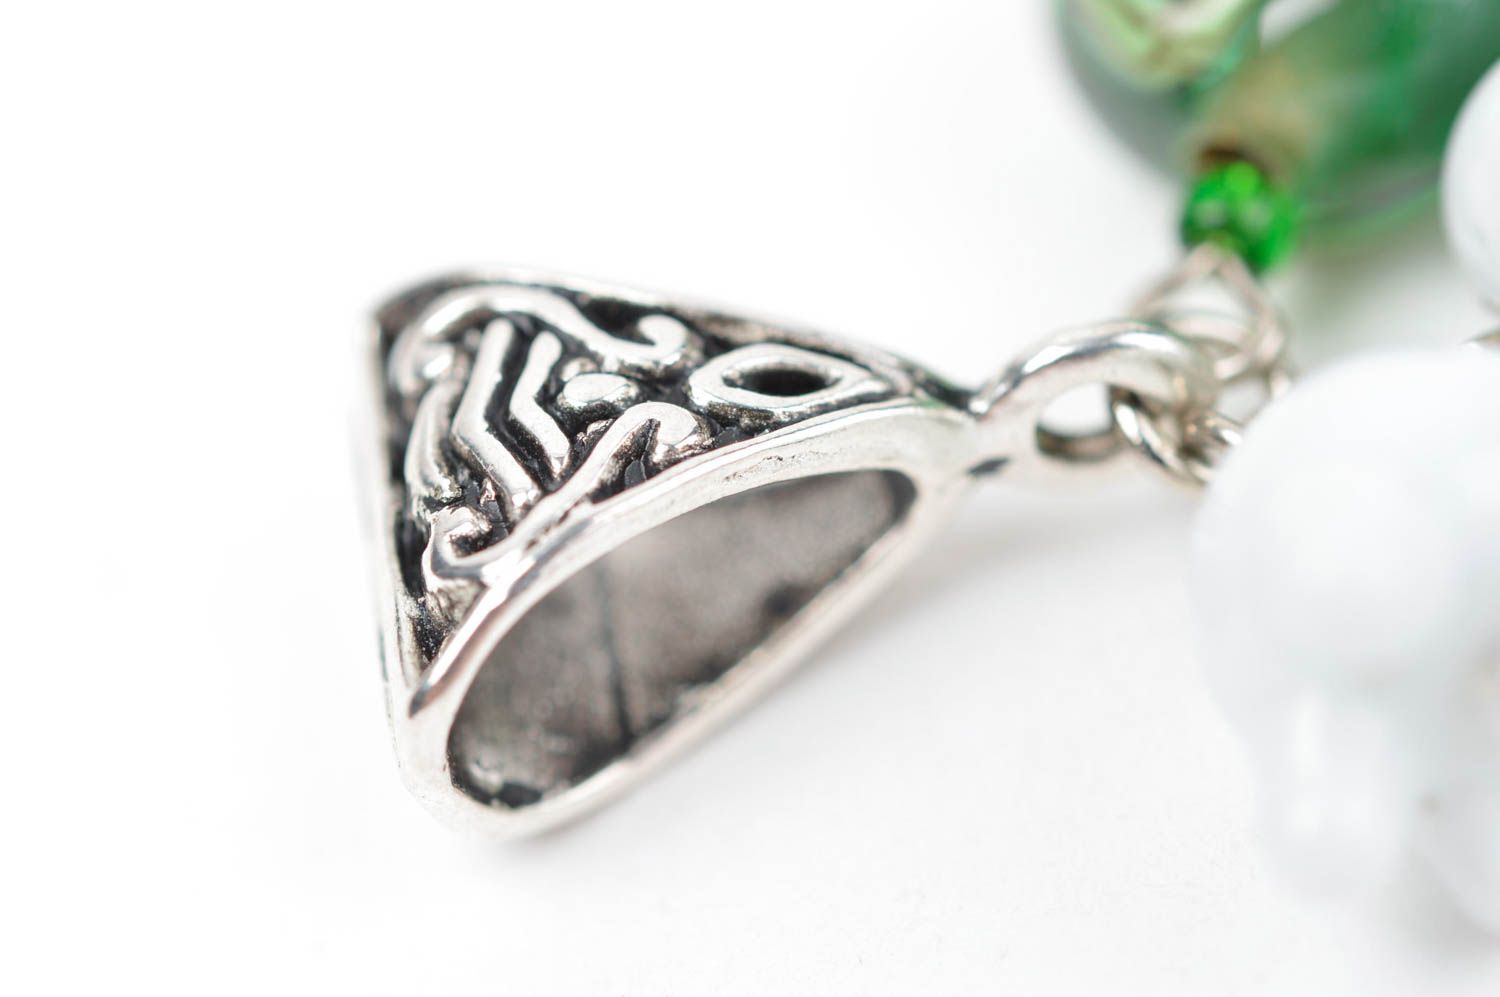 Unusual handmade beaded pendant glass bead pendant designer jewelry gift ideas photo 4